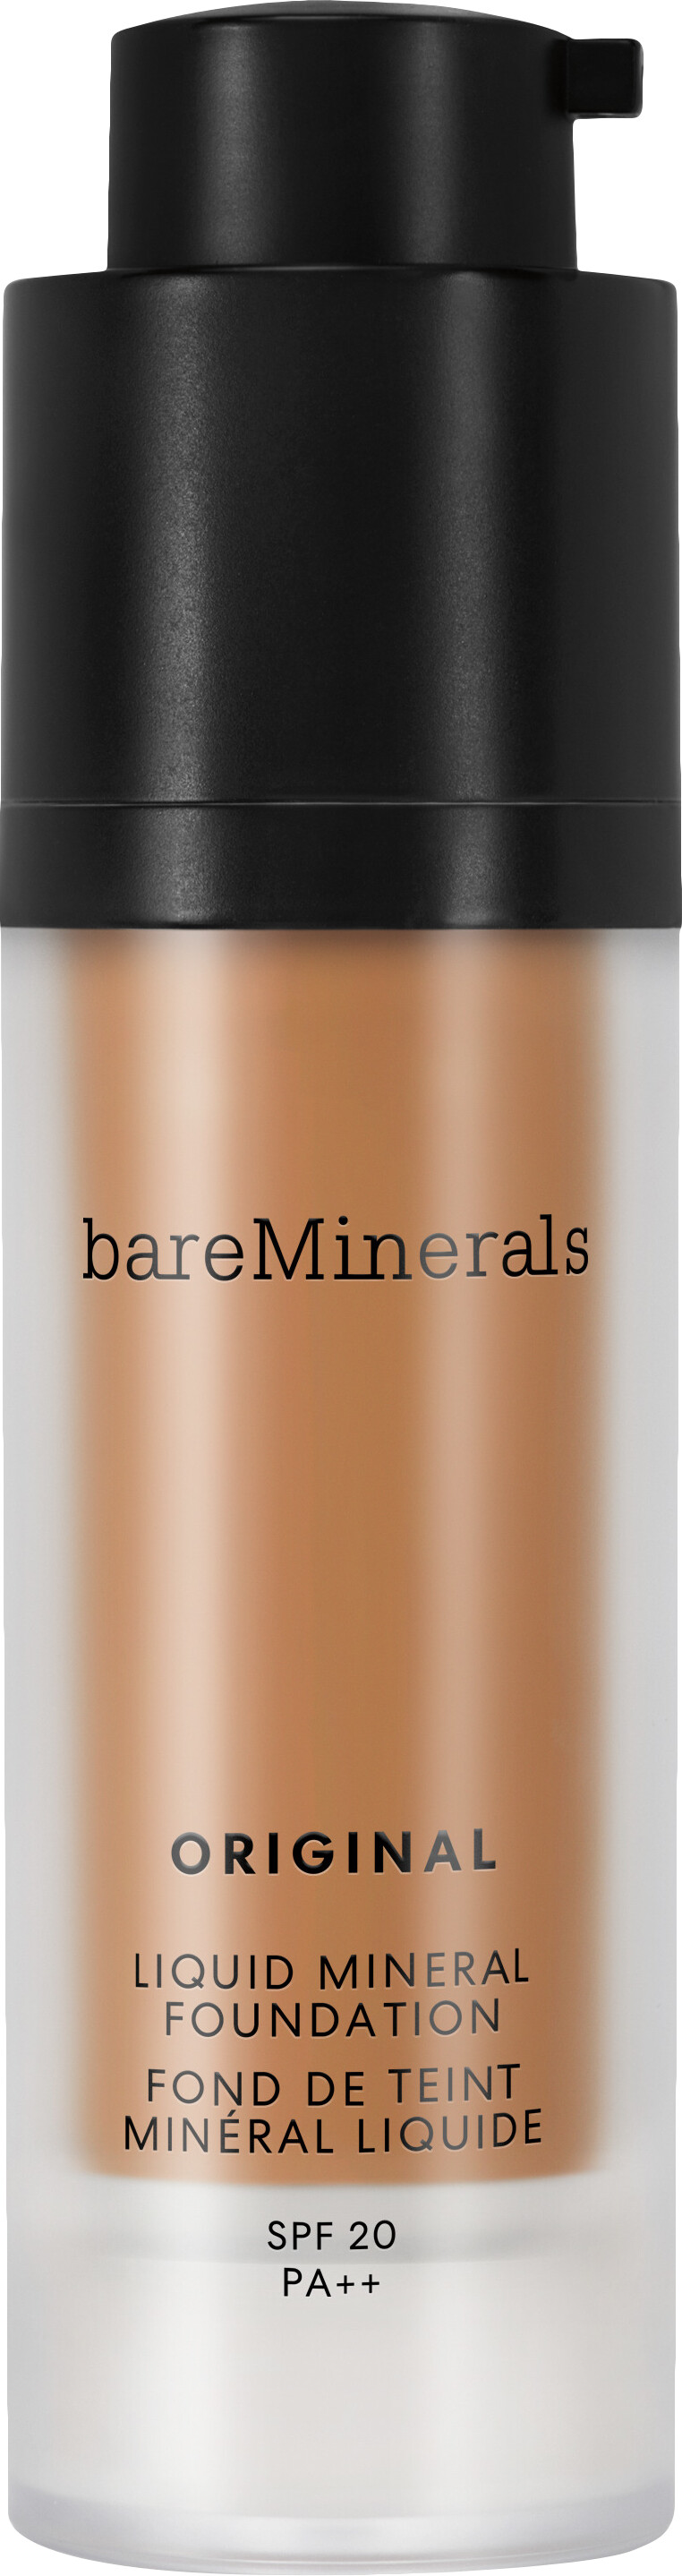 bareMinerals Original Liquid Mineral Foundation SPF20 30ml 23 - Medium Dark